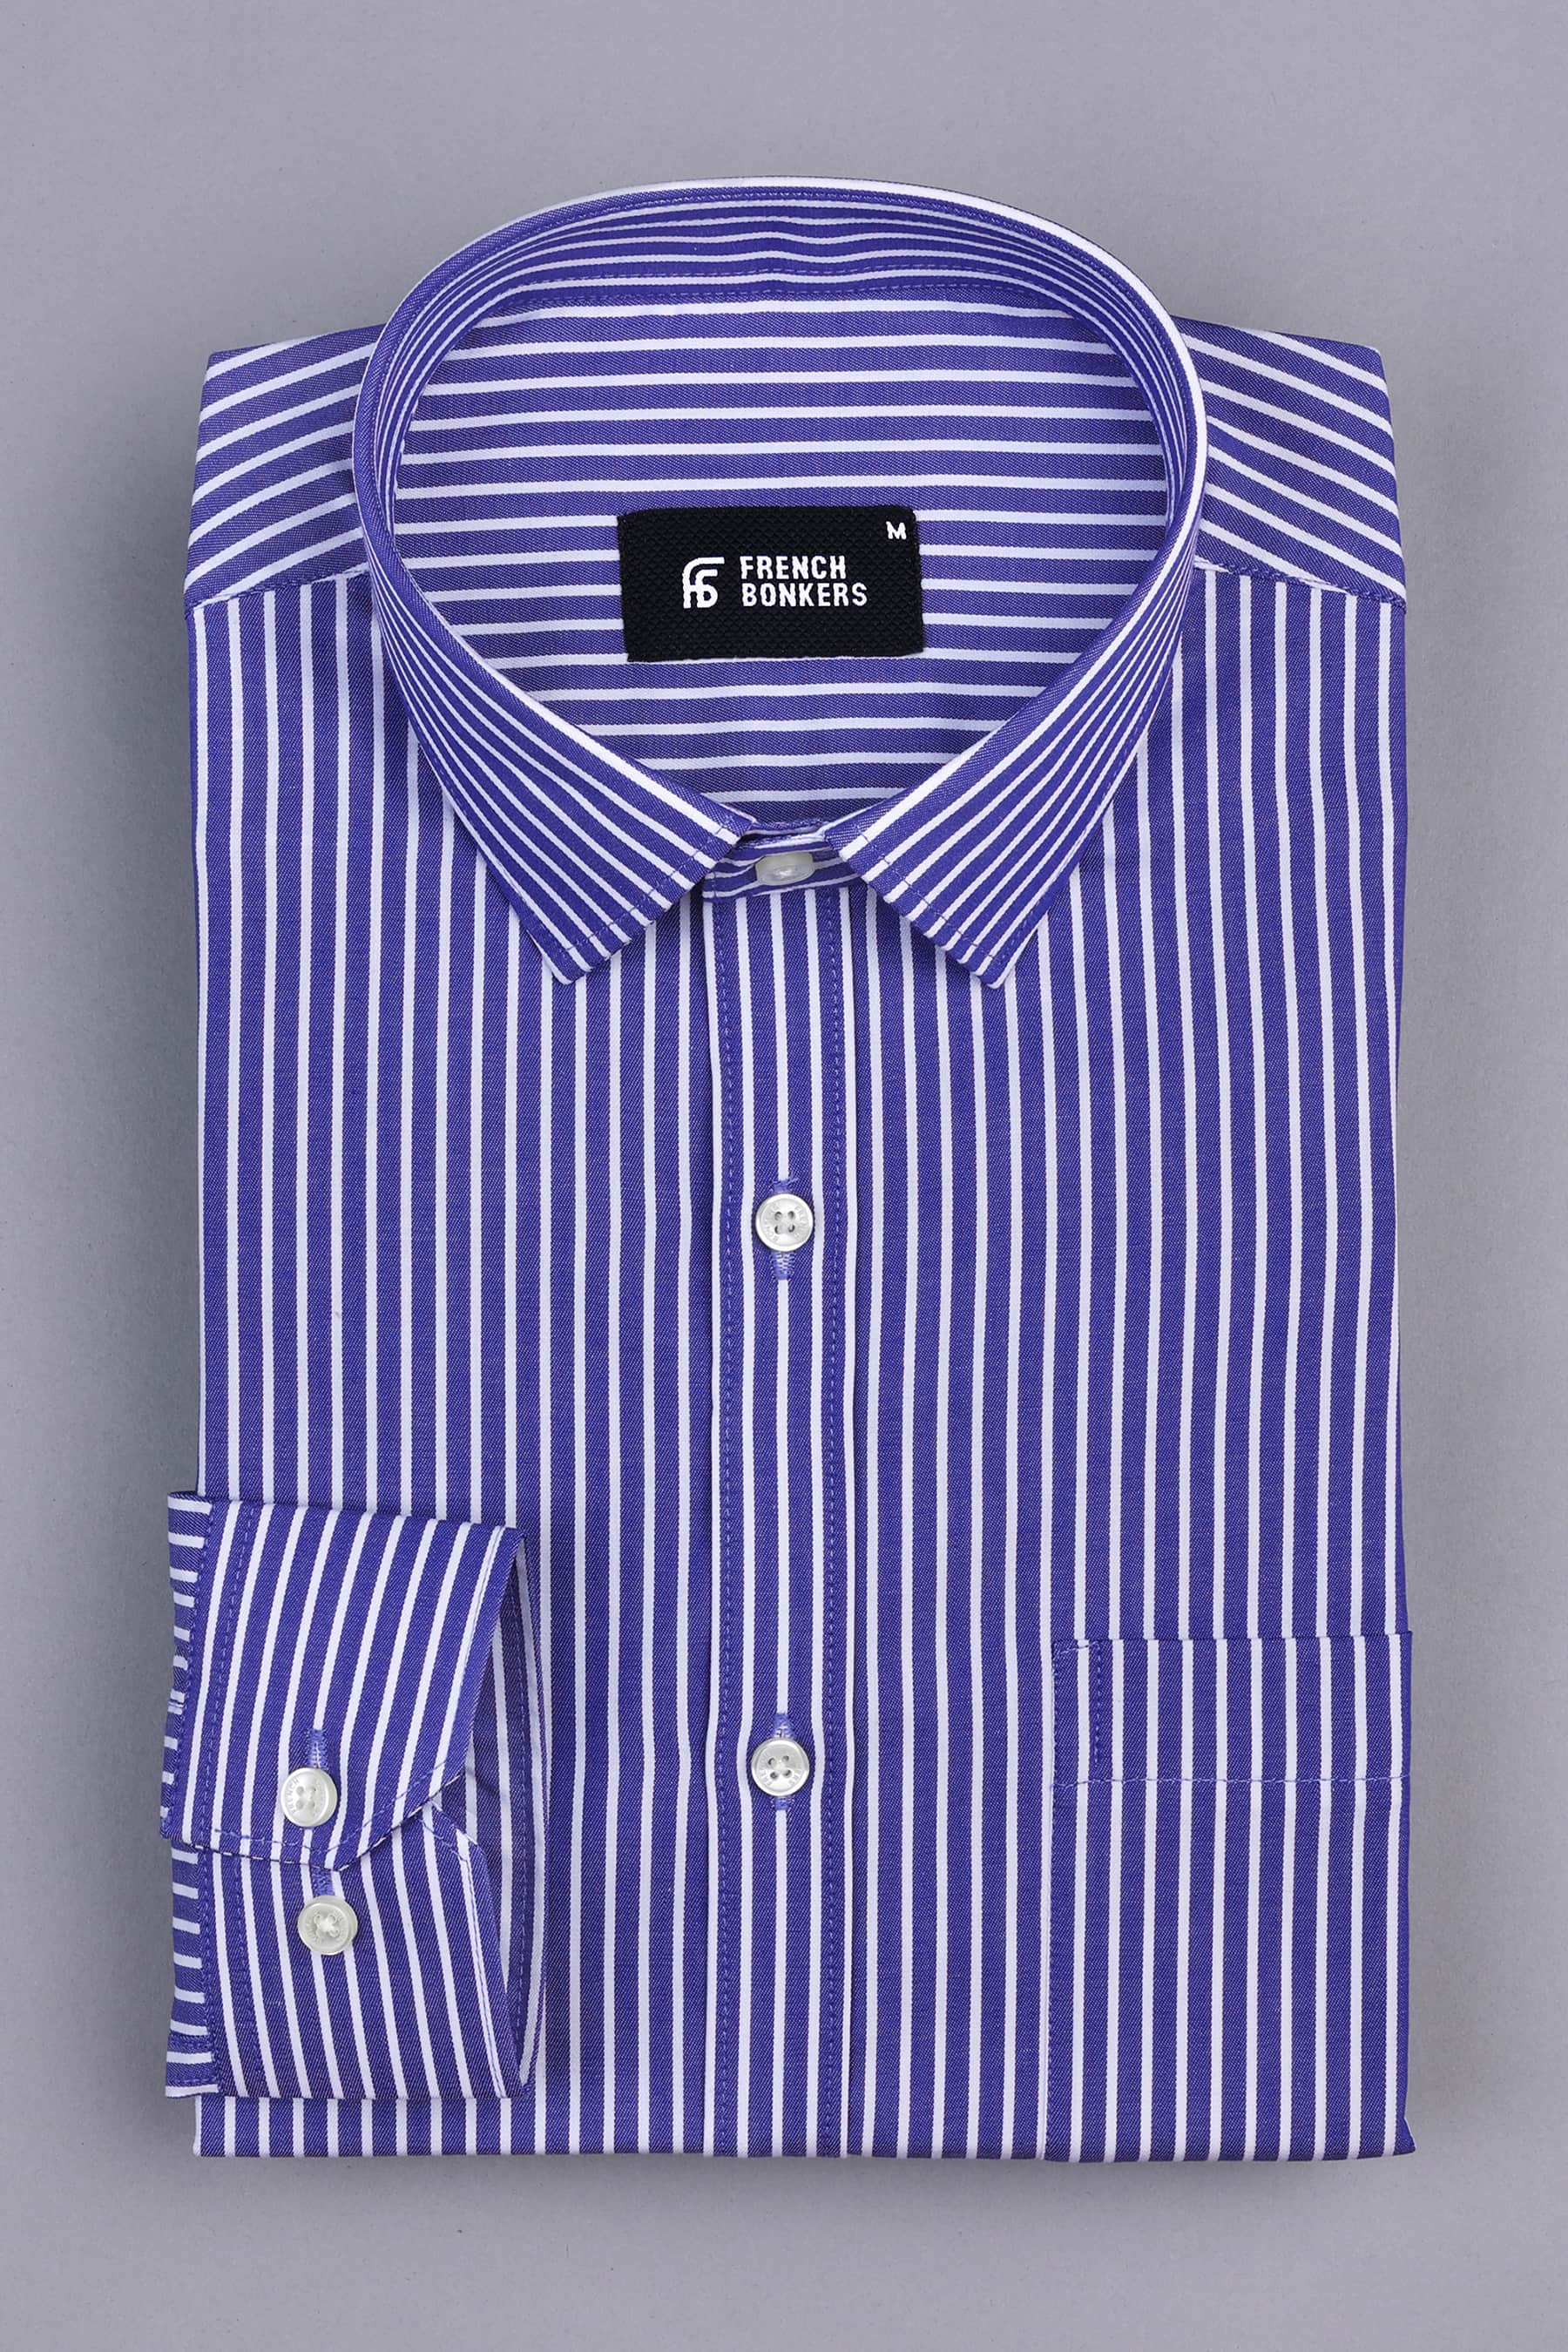 Admiral blue with white regency stripe cotton shirt